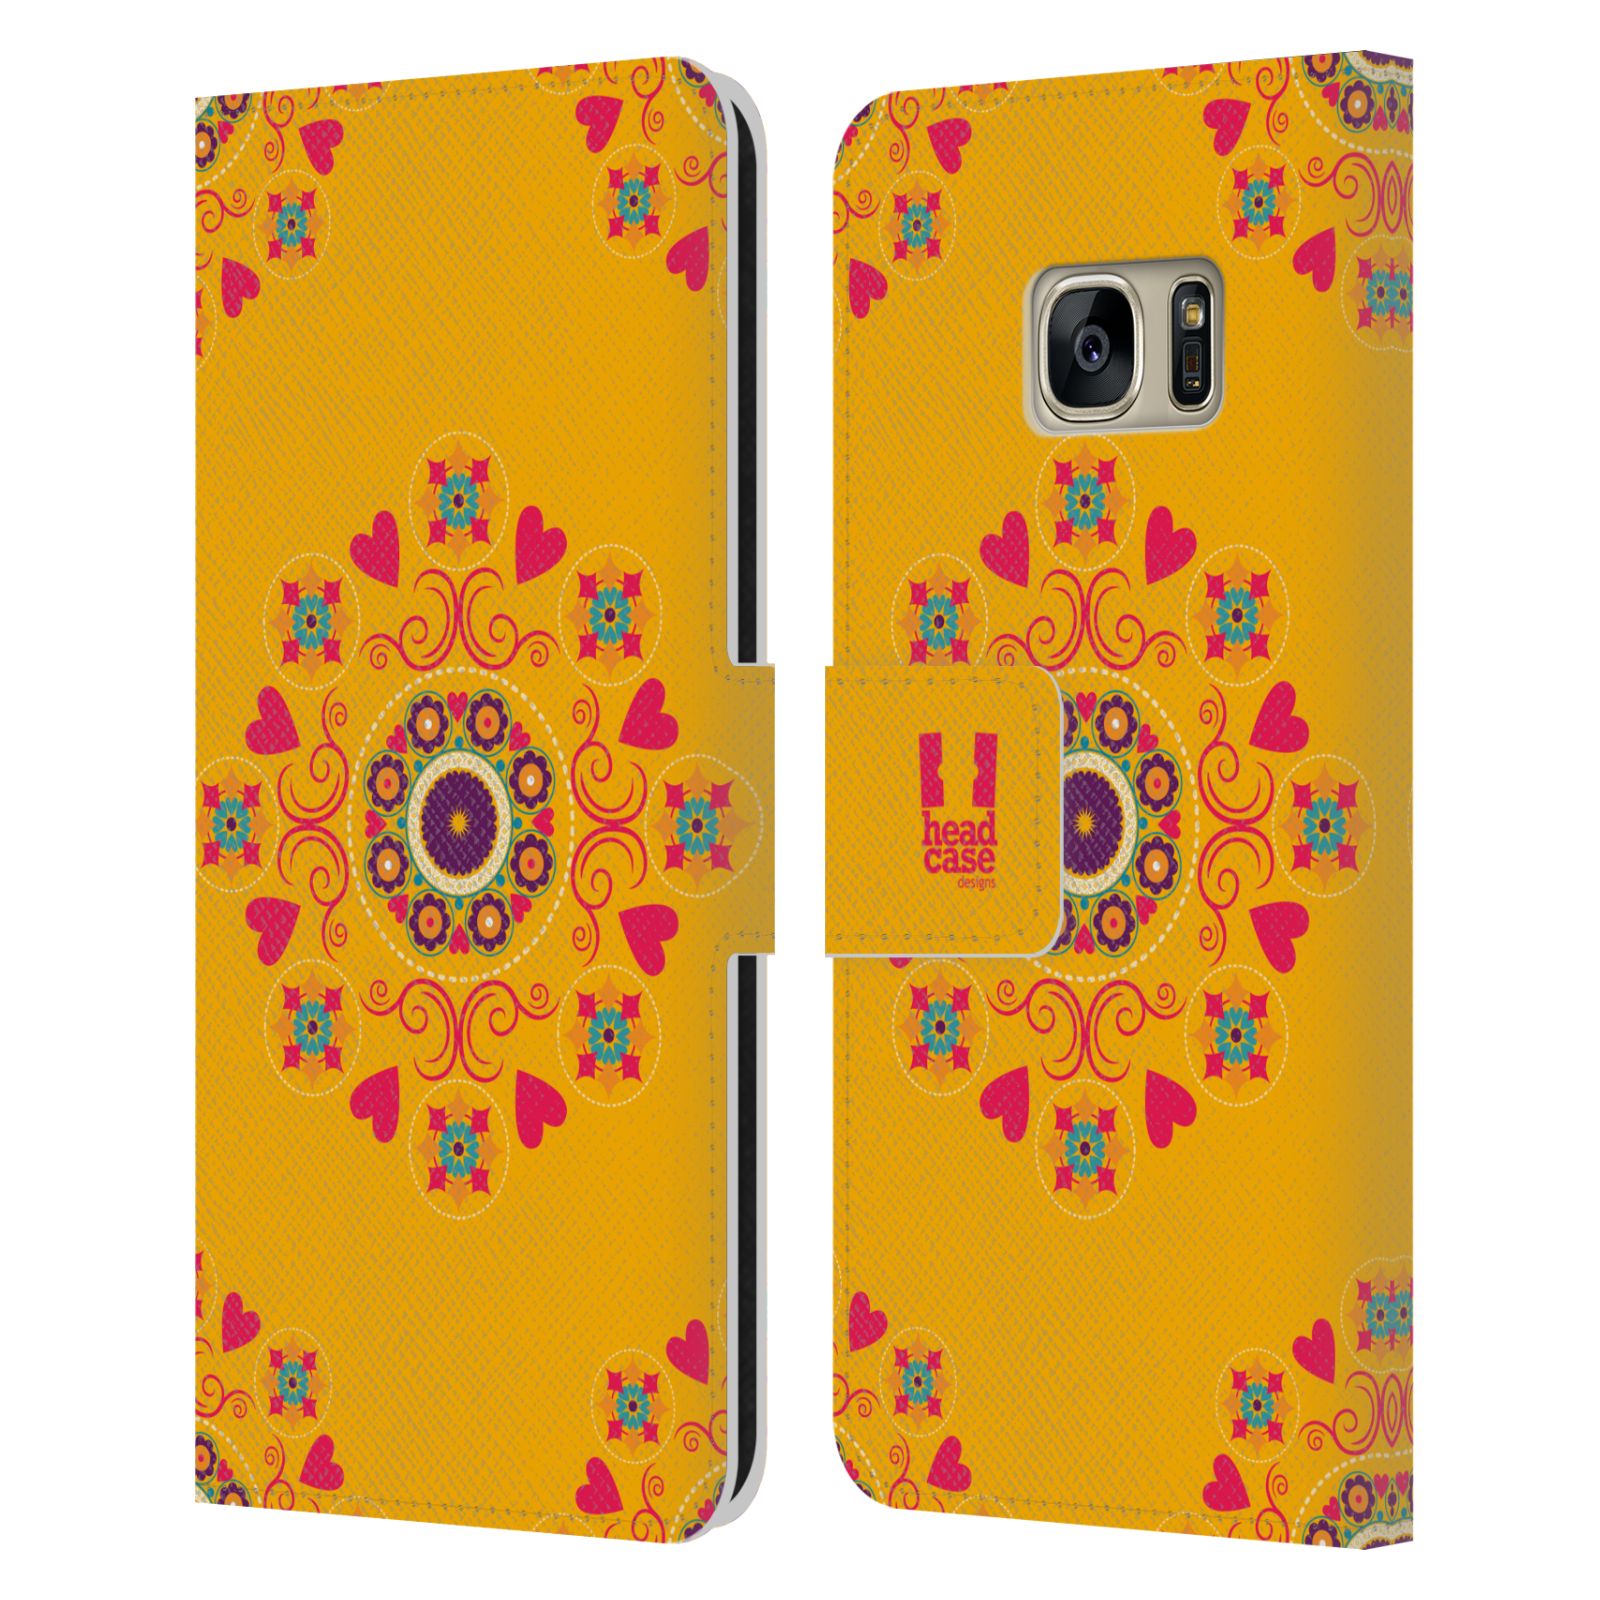 HEAD CASE Flipové pouzdro pro mobil Samsung Galaxy S7 (G9300) Slovanský vzor květiny a srdíčka žlutá